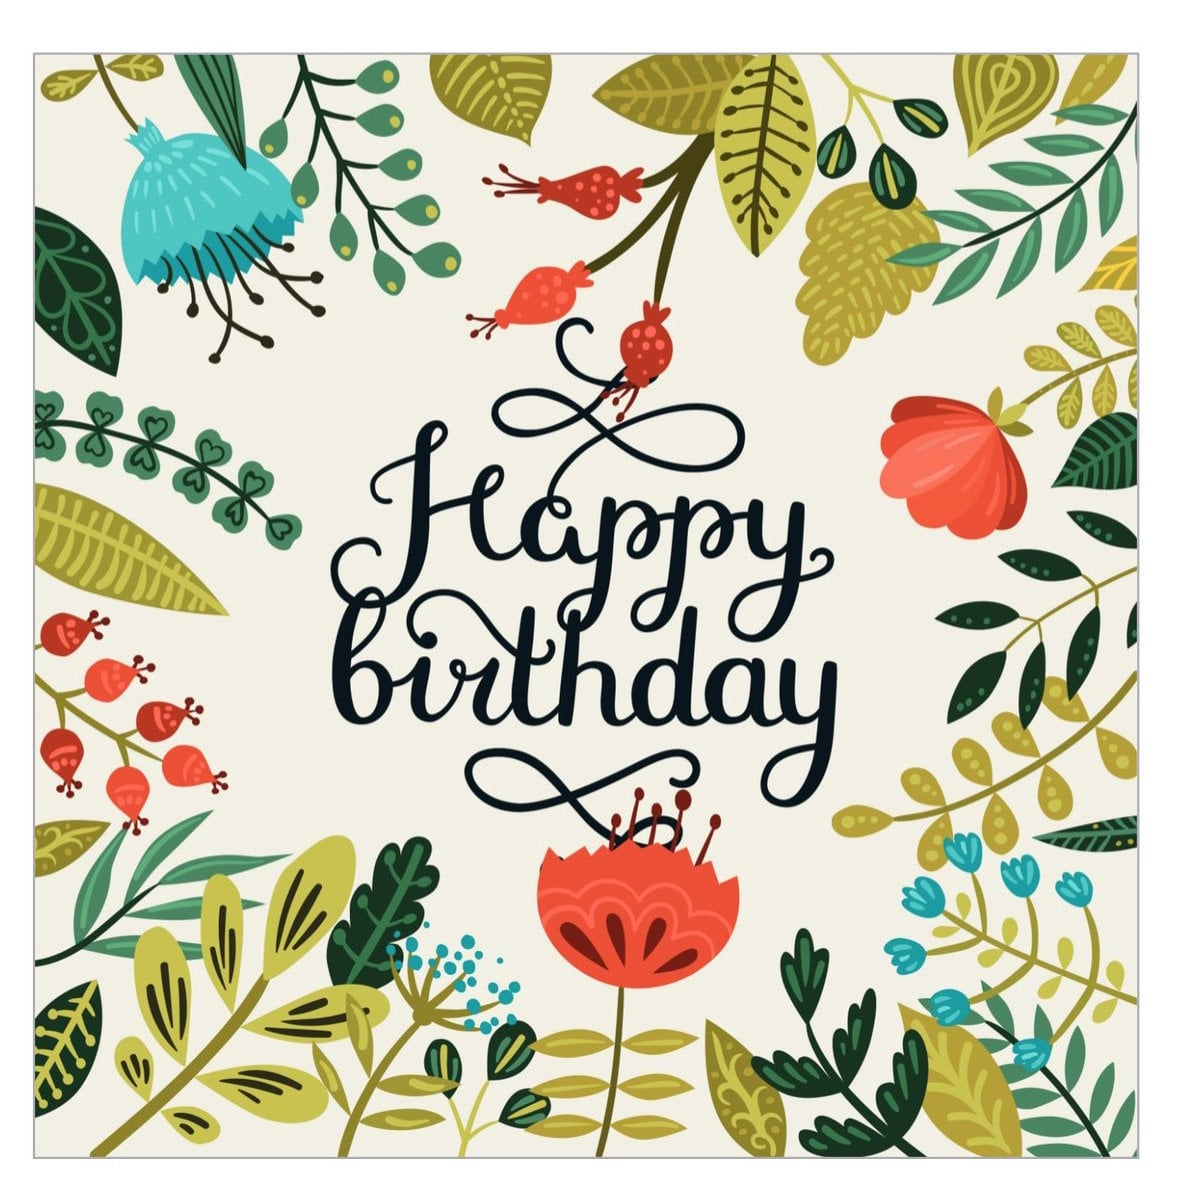 Free Printable Cards For Birthdays | Popsugar Smart Living inside Happy Birthday Free Printable